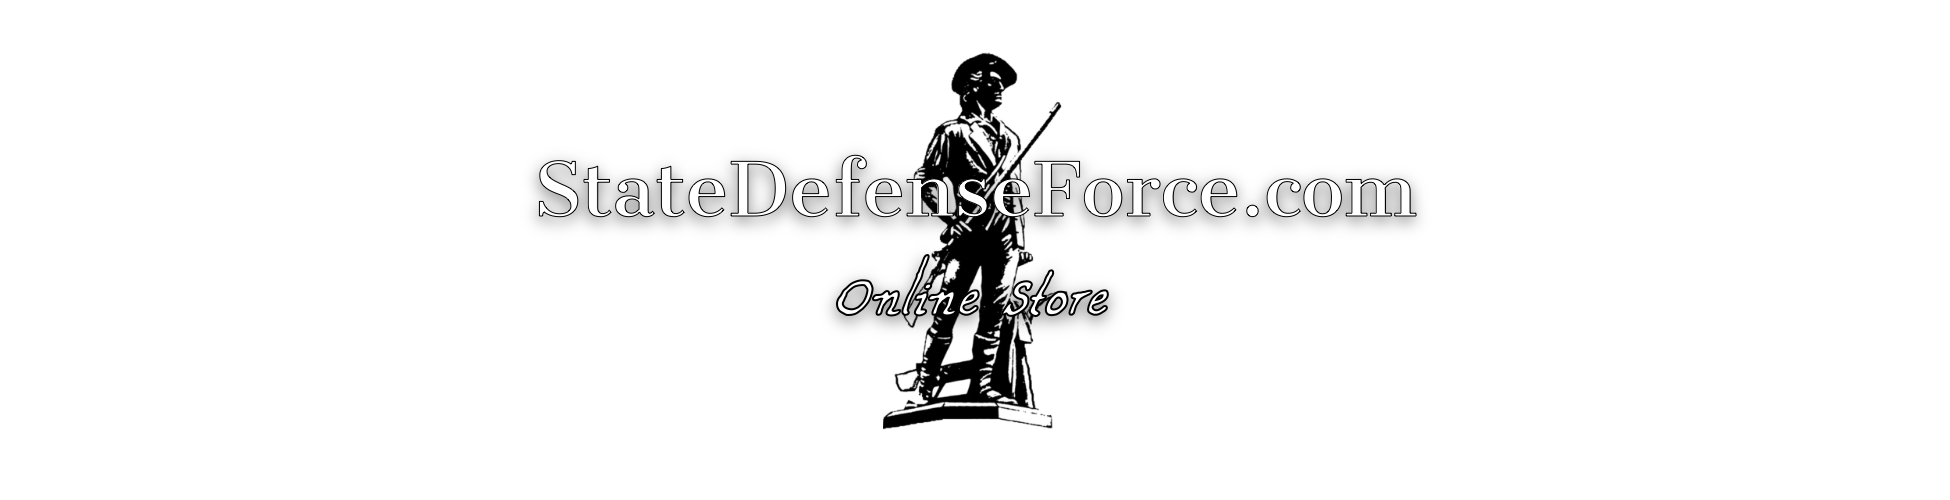 StateDefenseForce.com Online Store